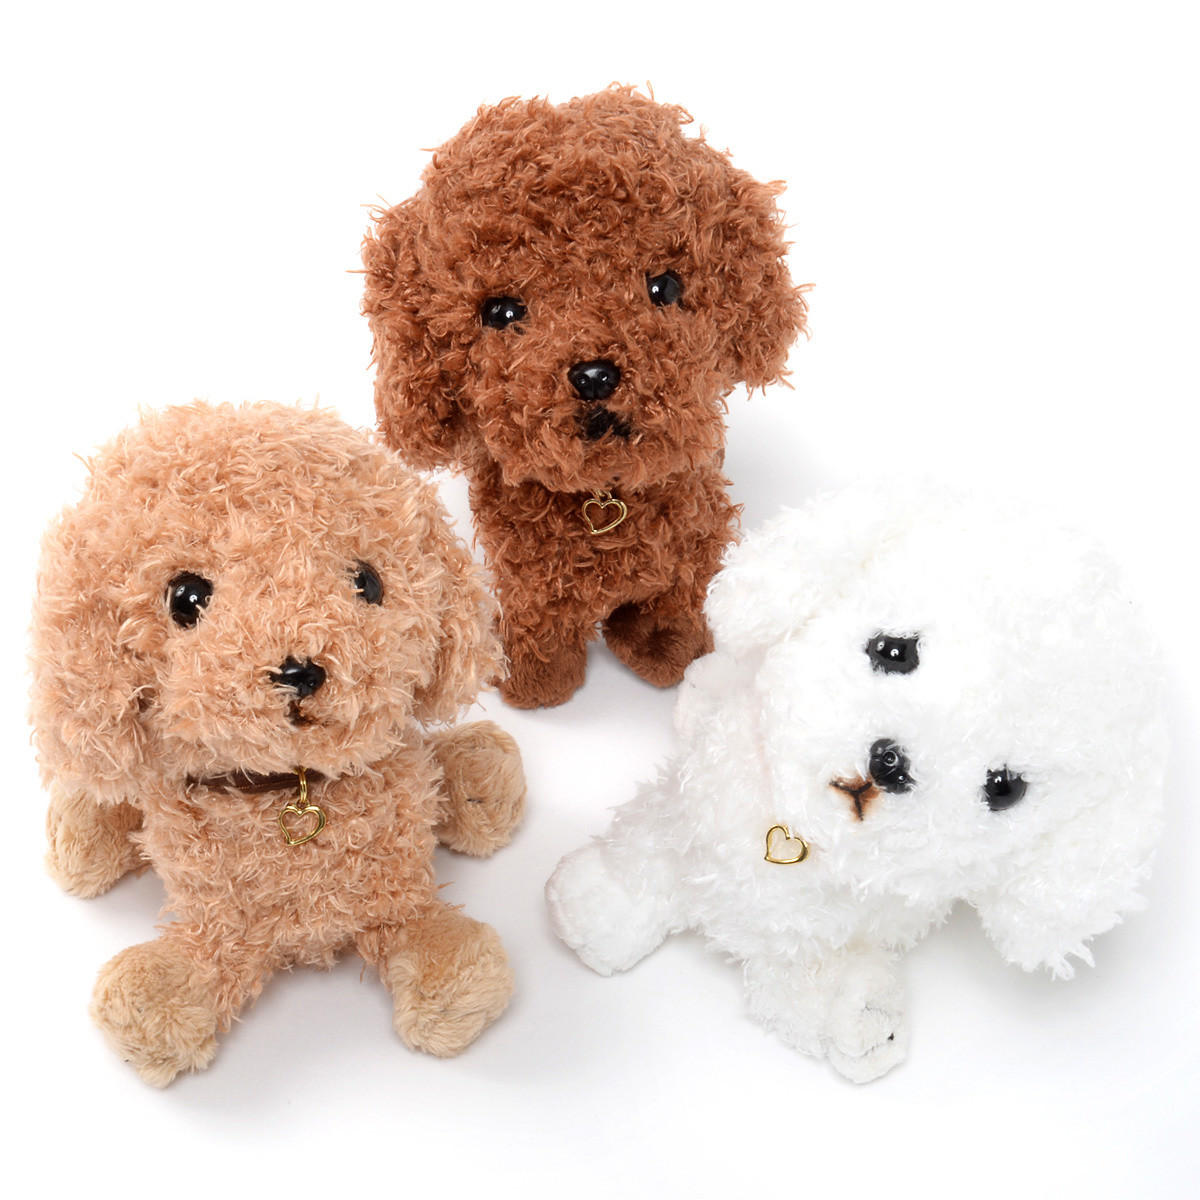 poodle stuffed animals